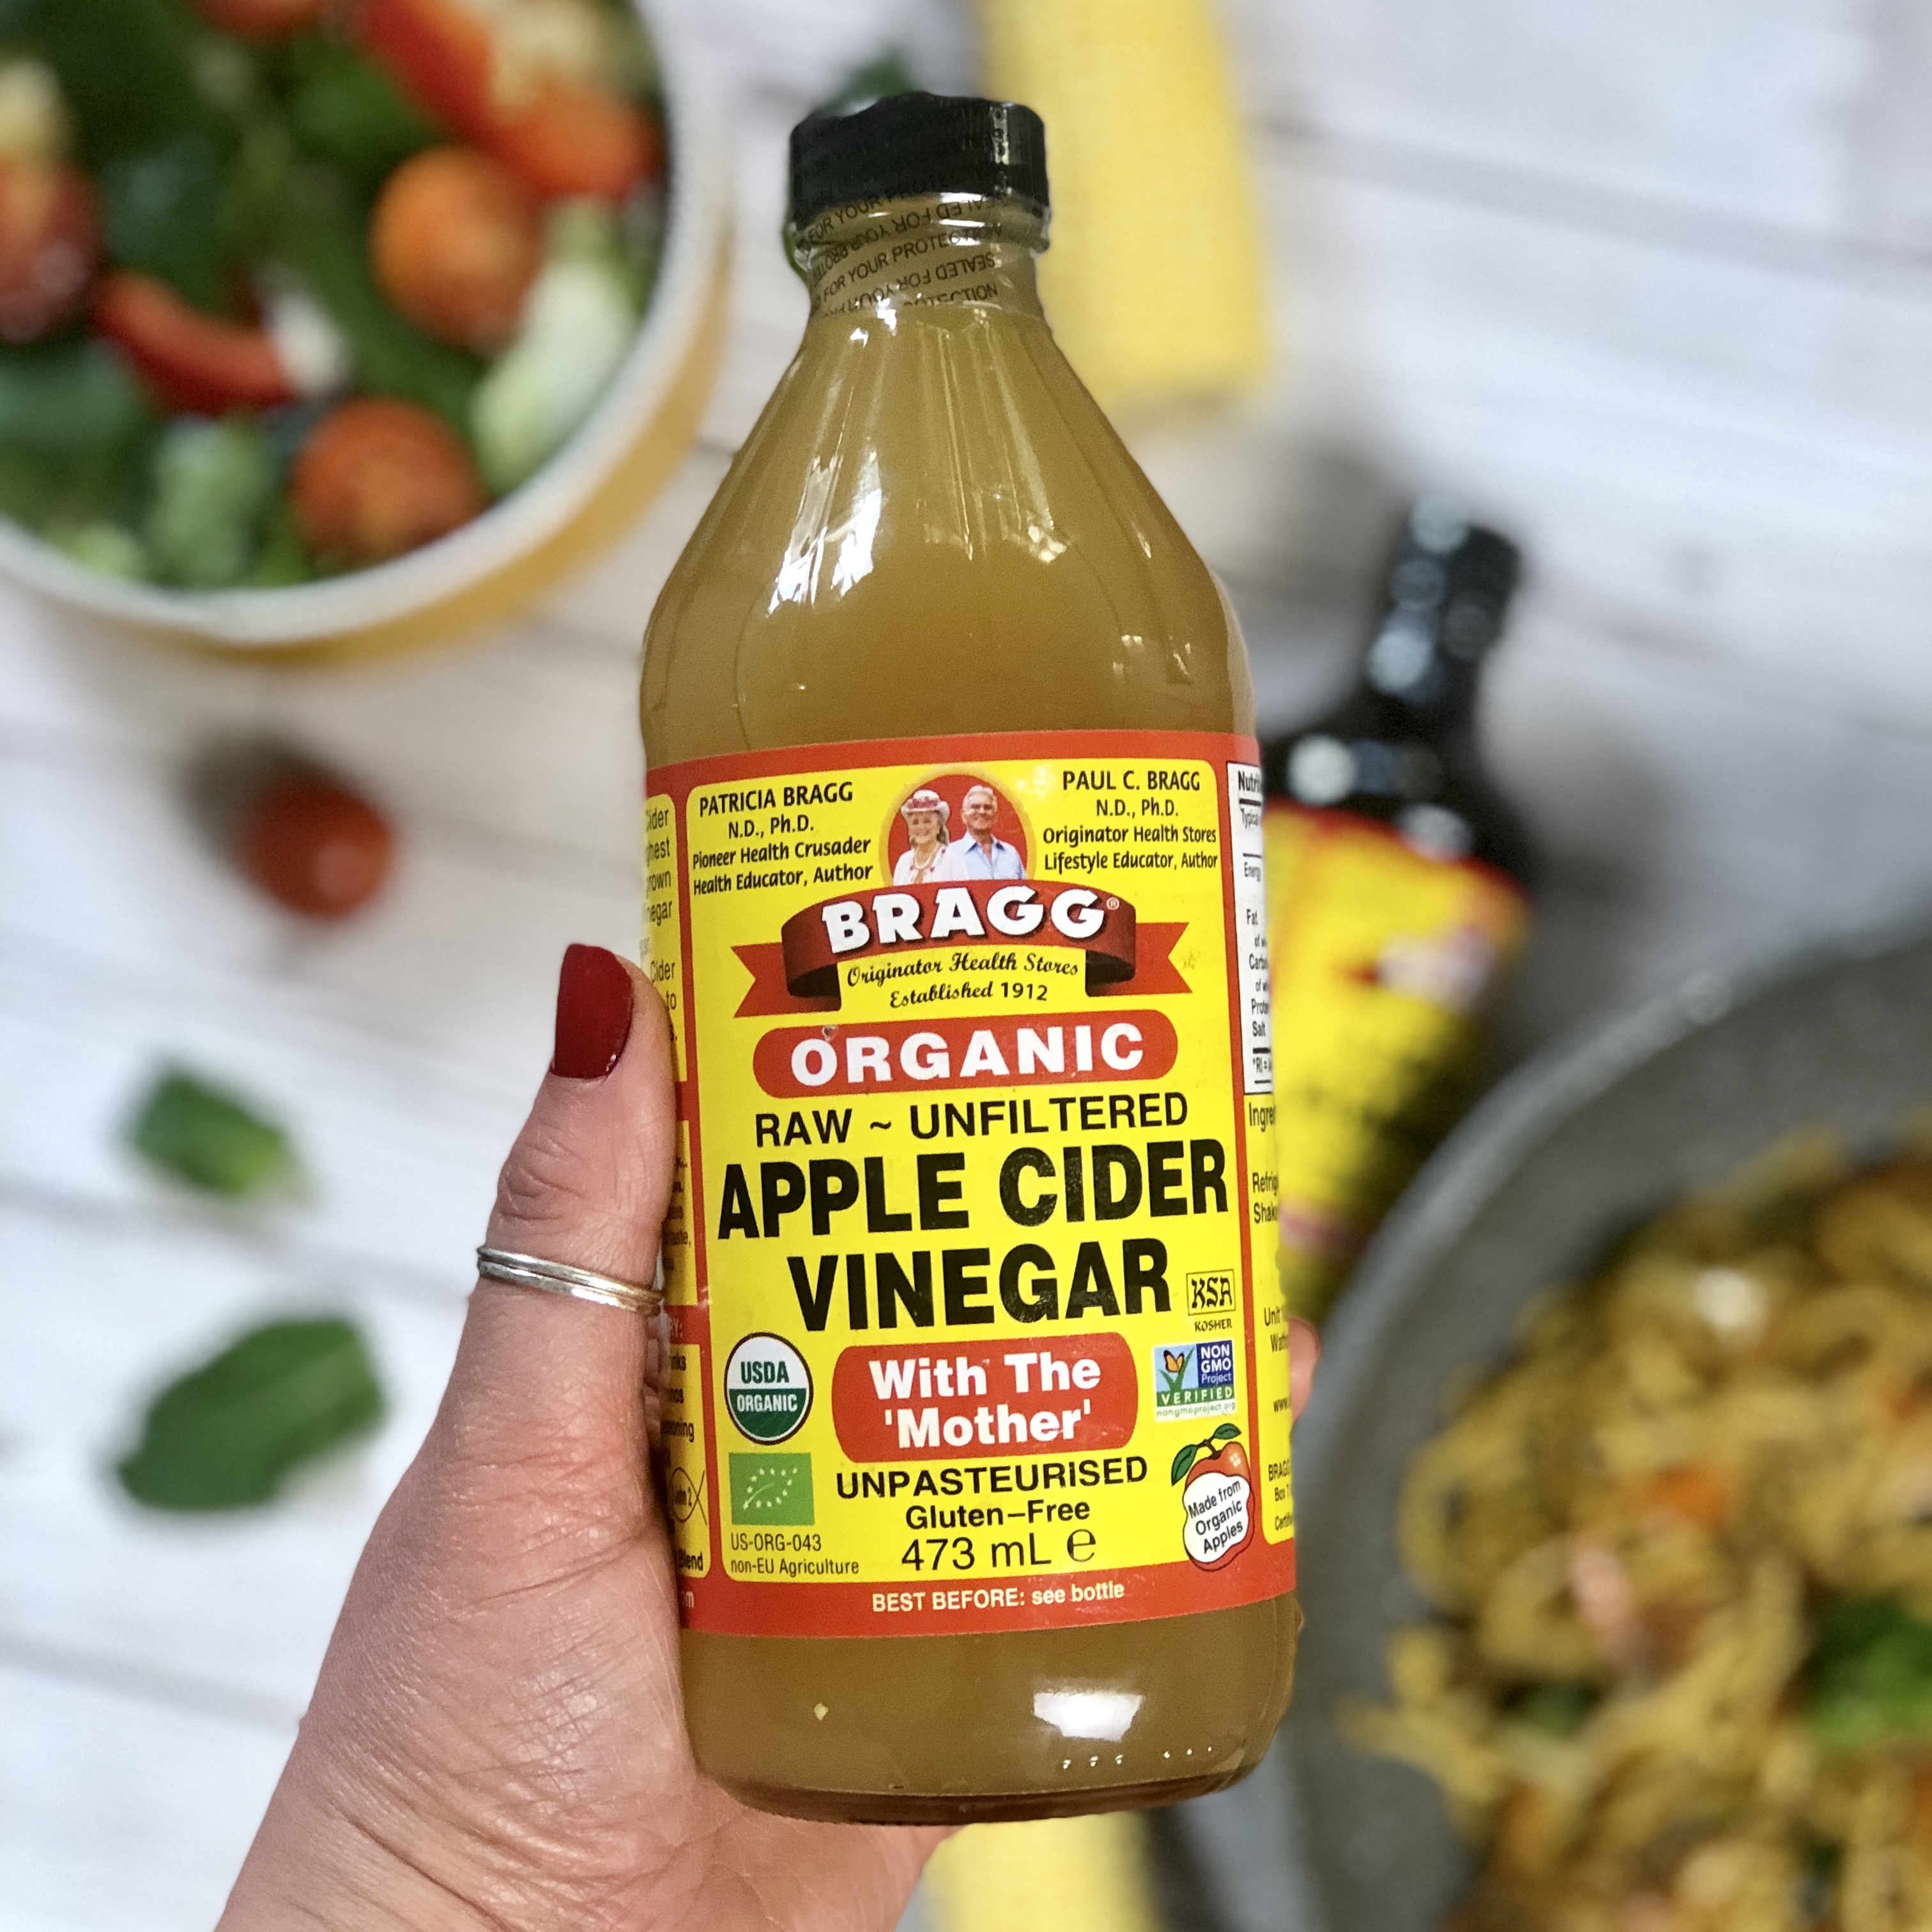 Bragg Apple Cider Vinegar and salads and foods